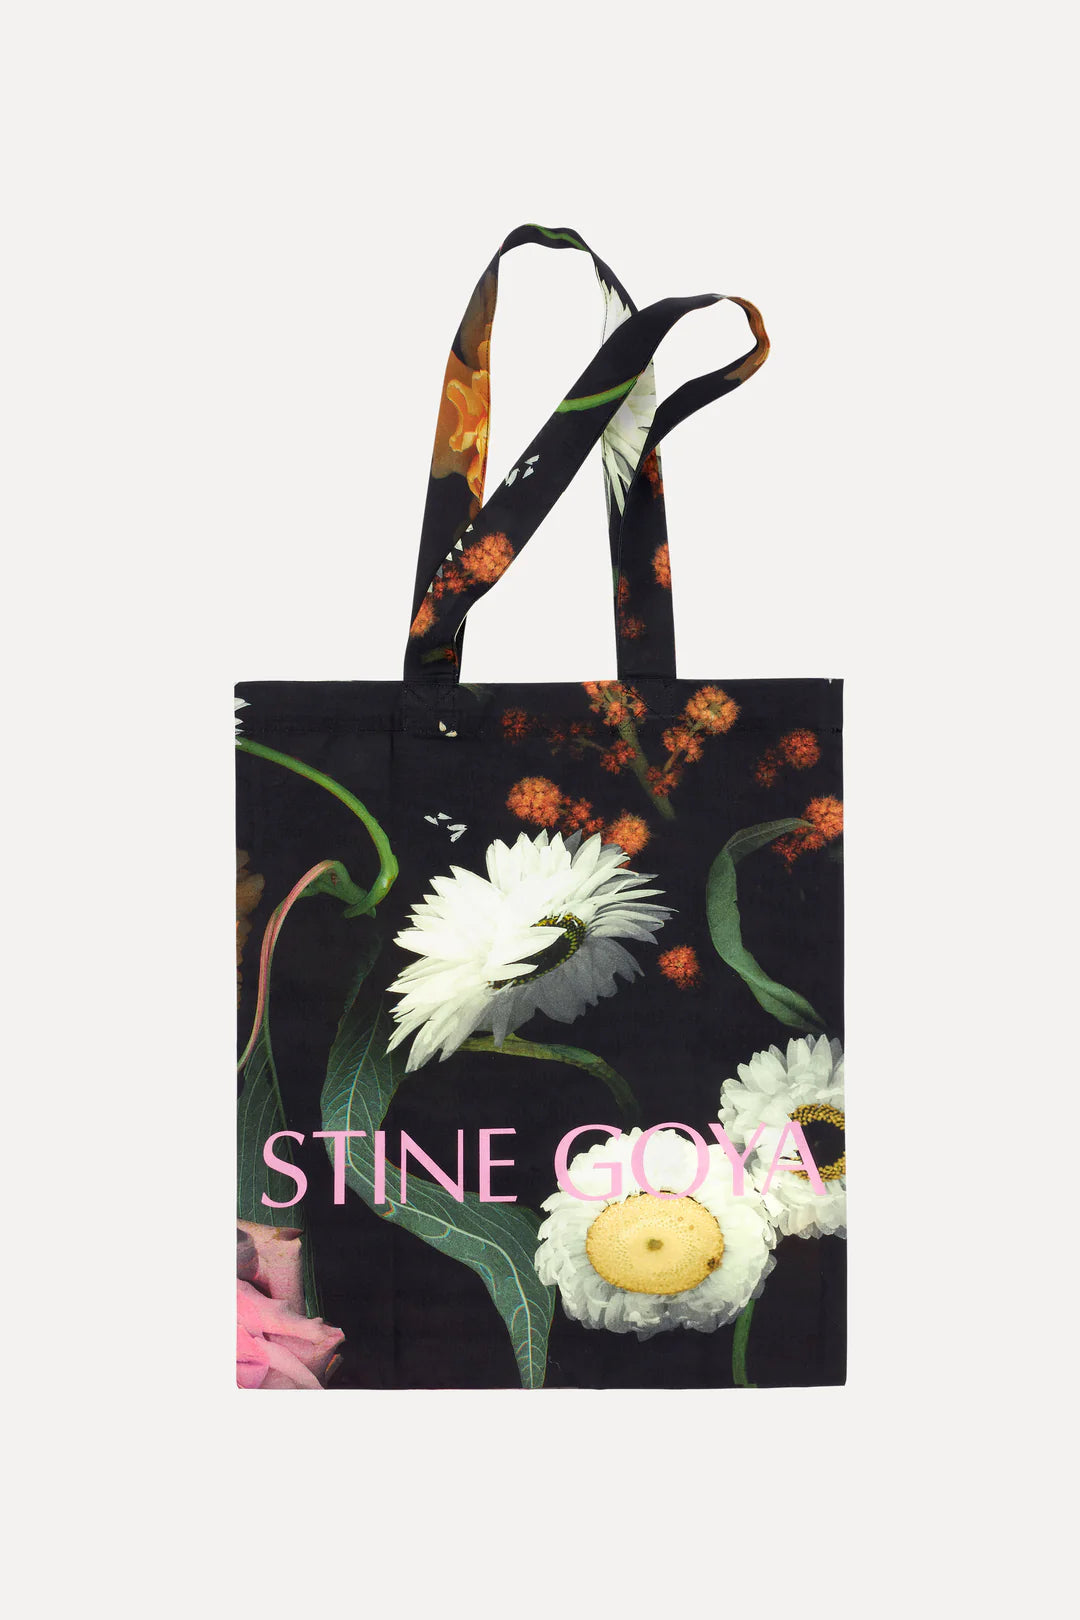 Stine Goya SGrita tote bag - scanned foliage